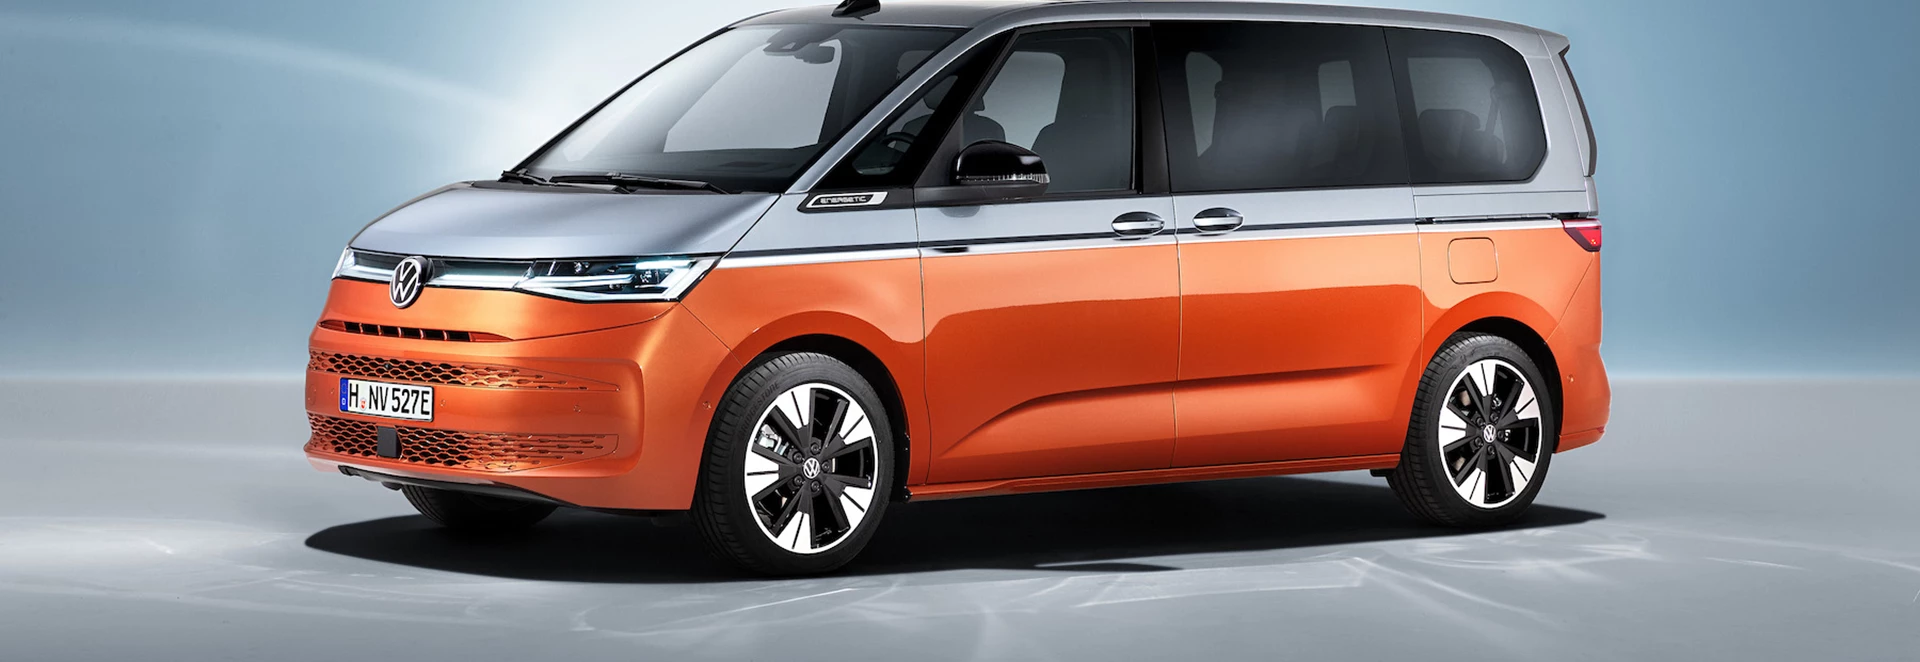 Volkswagen Multivan revealed as new seven-seat MPV 